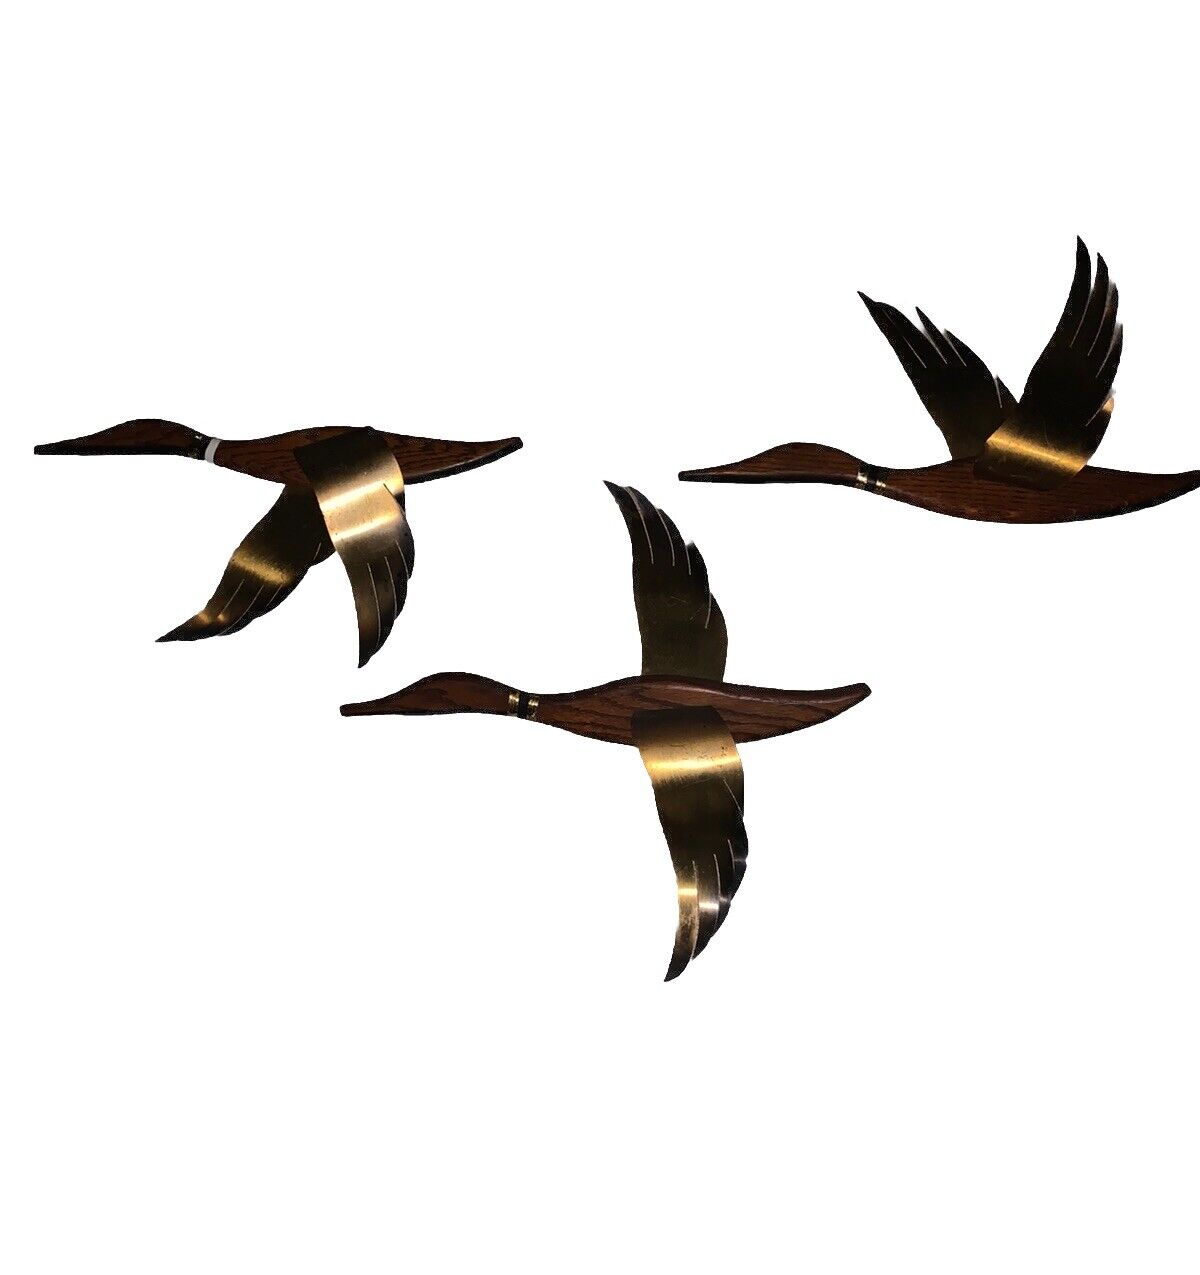 Set 3 VTG Flying Geese Ducks Wall Art Decor MCM Wood Brass Birds Masketeers 